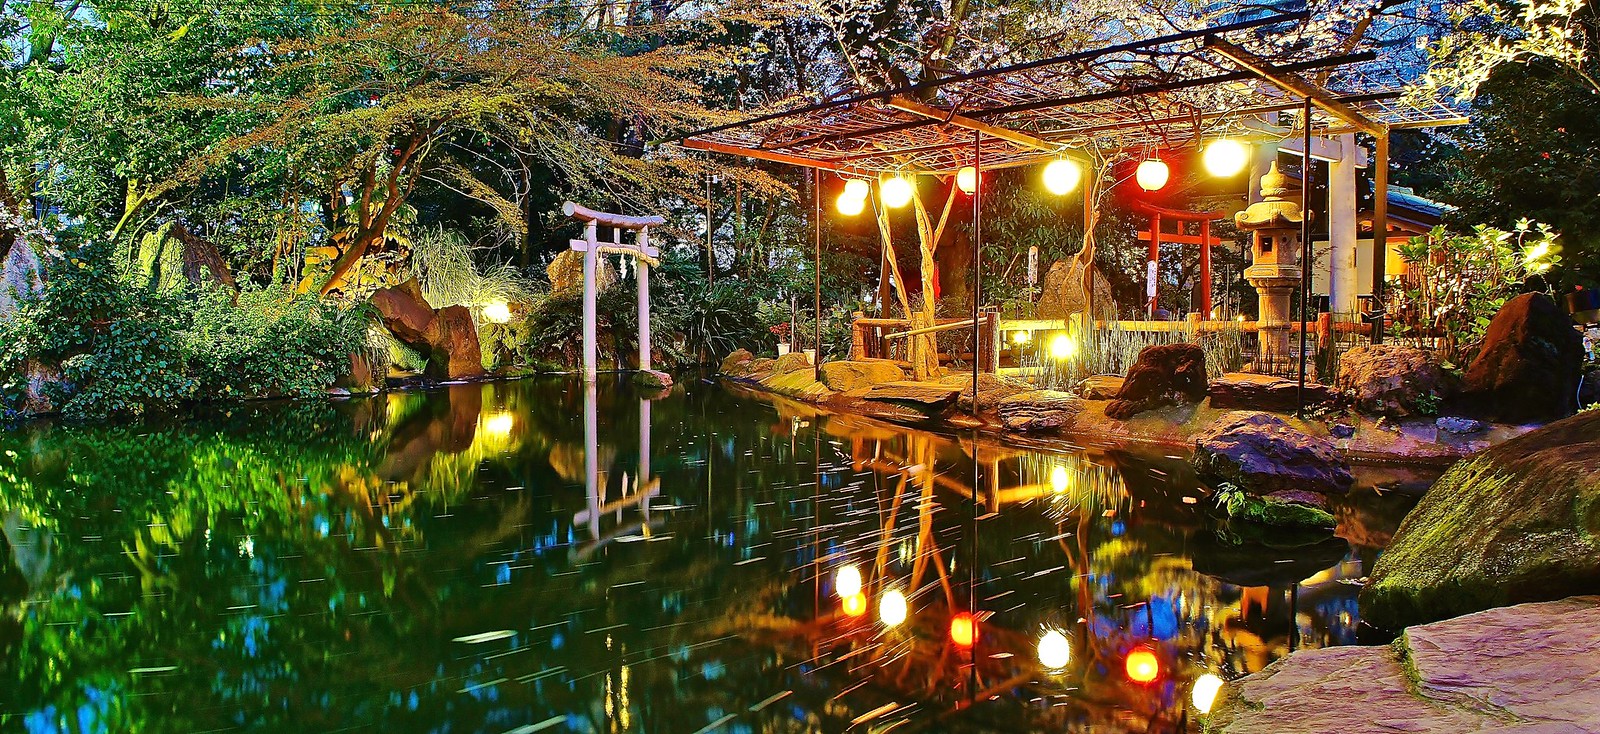 Pond reflections at Atago Shrine